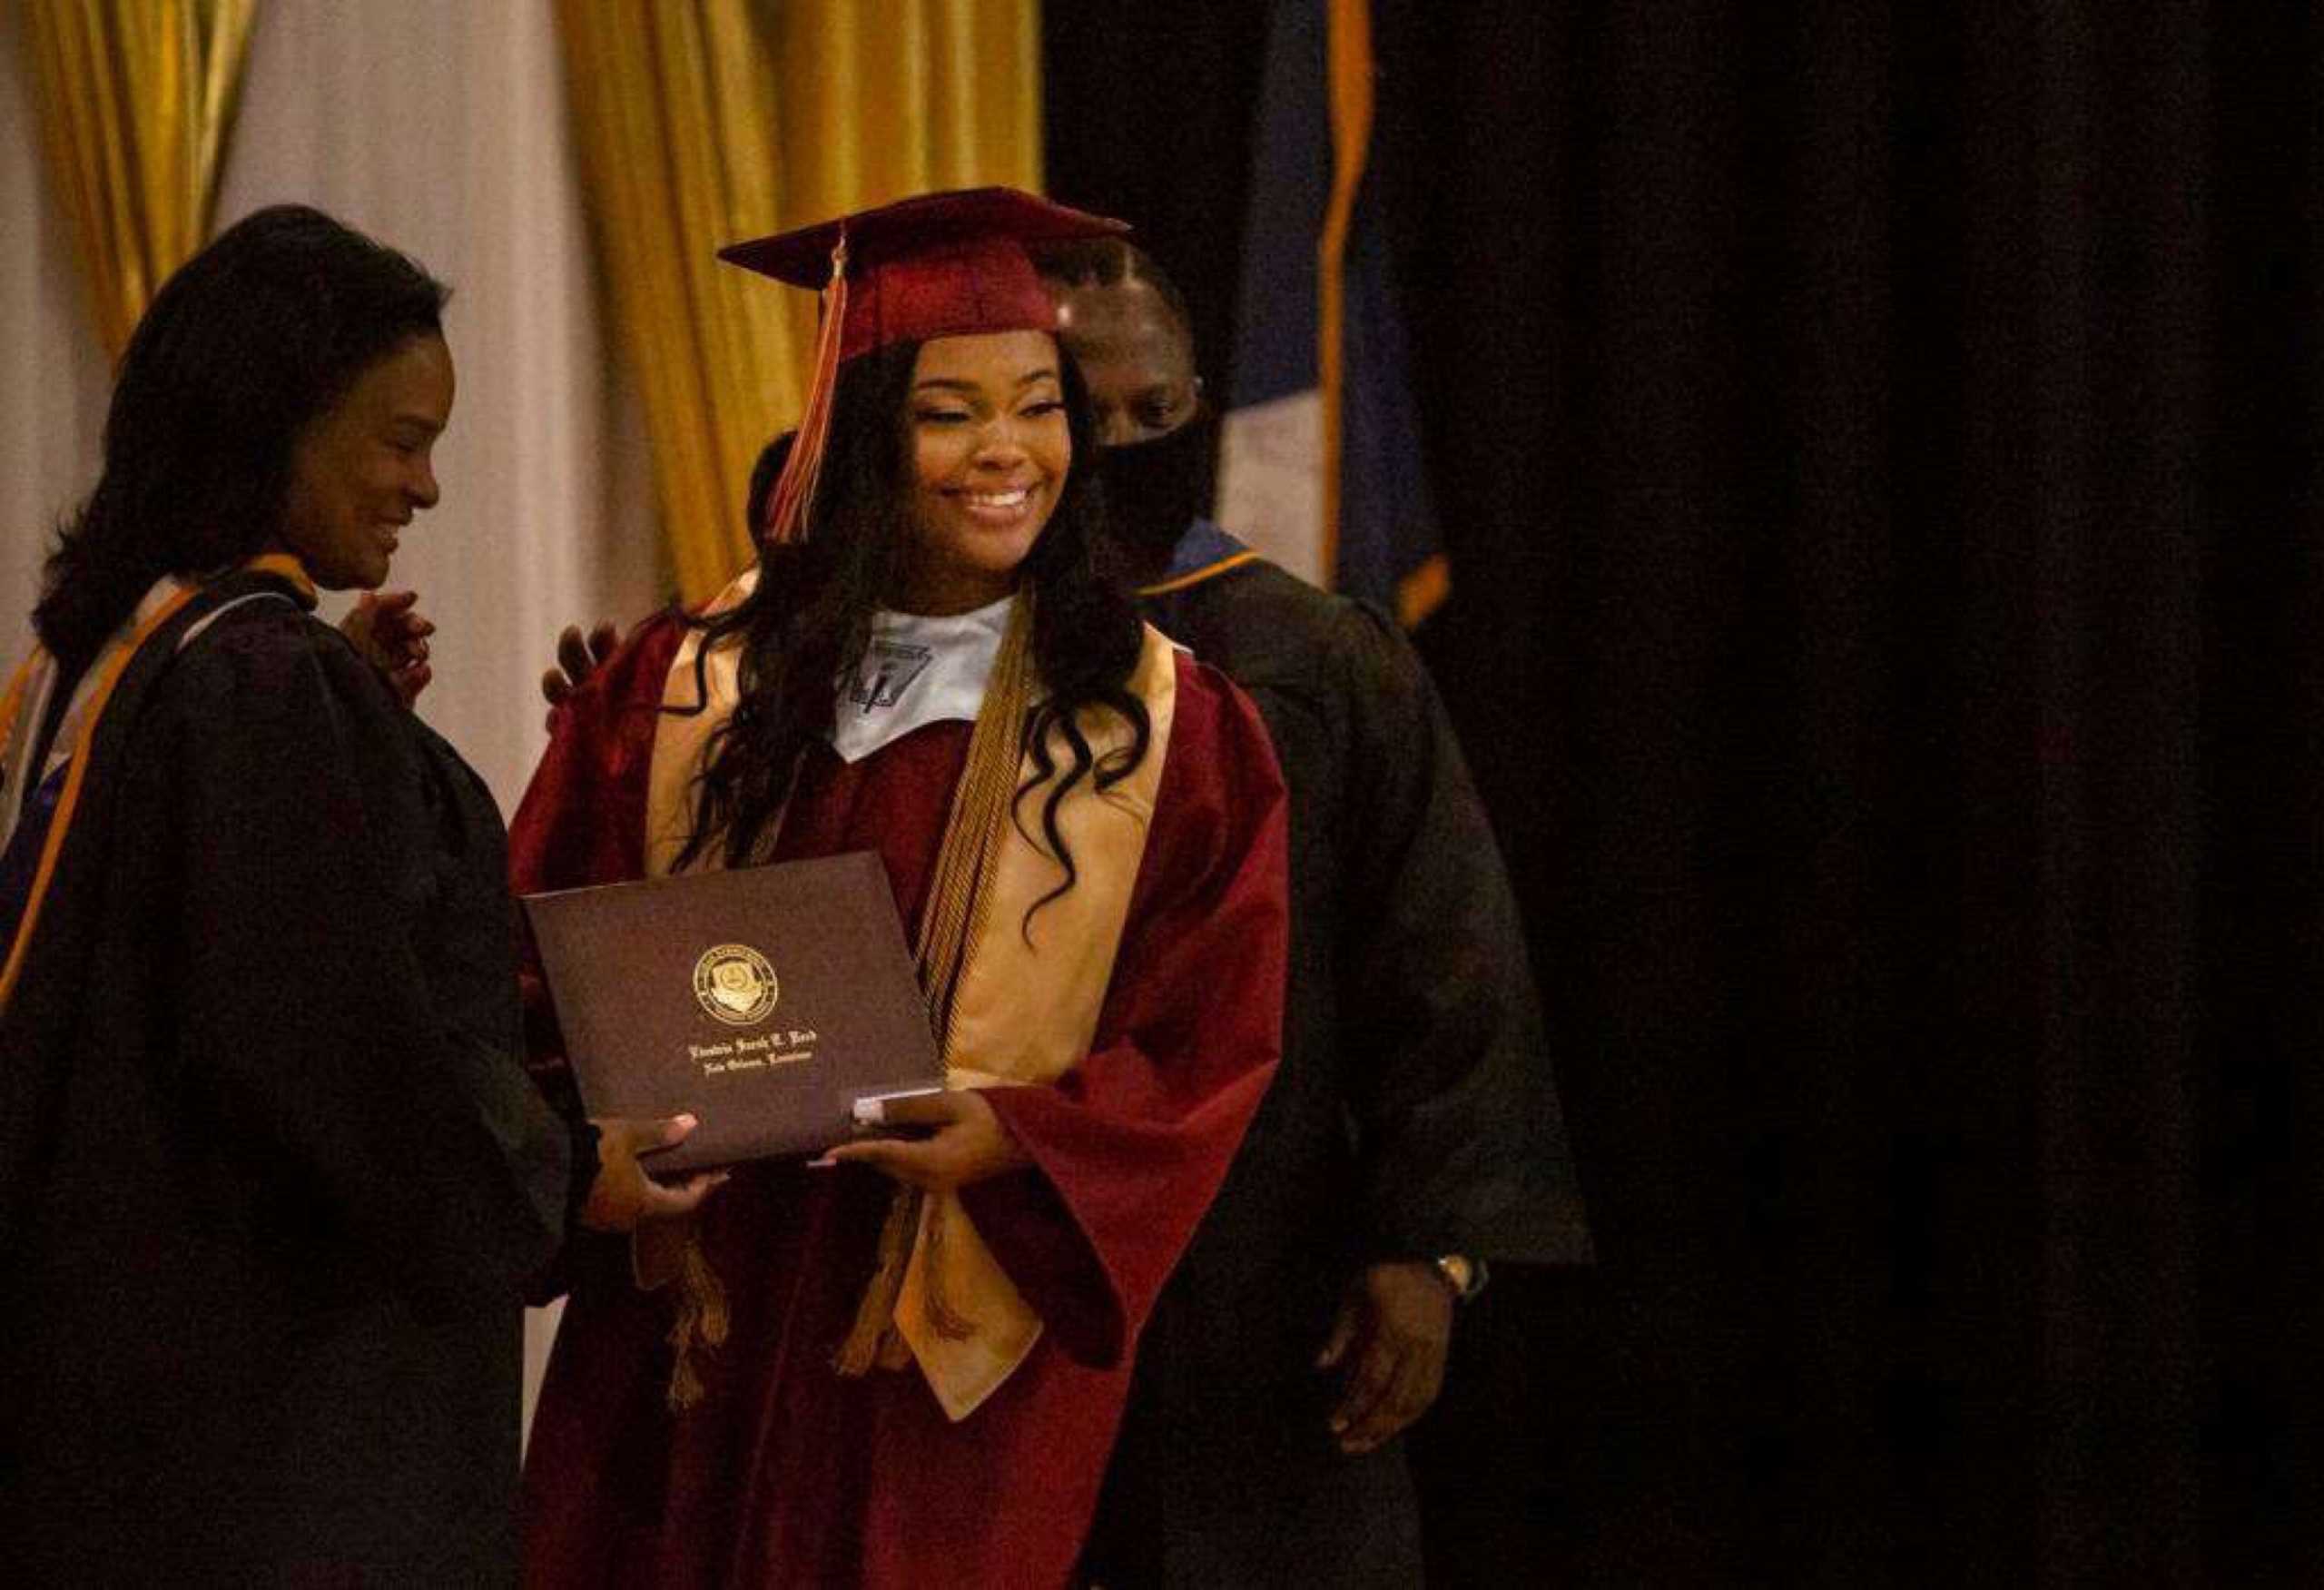 Jon'nae Sylvester, underrepresented student at Scripps College, as valedictorian at her high school graduation